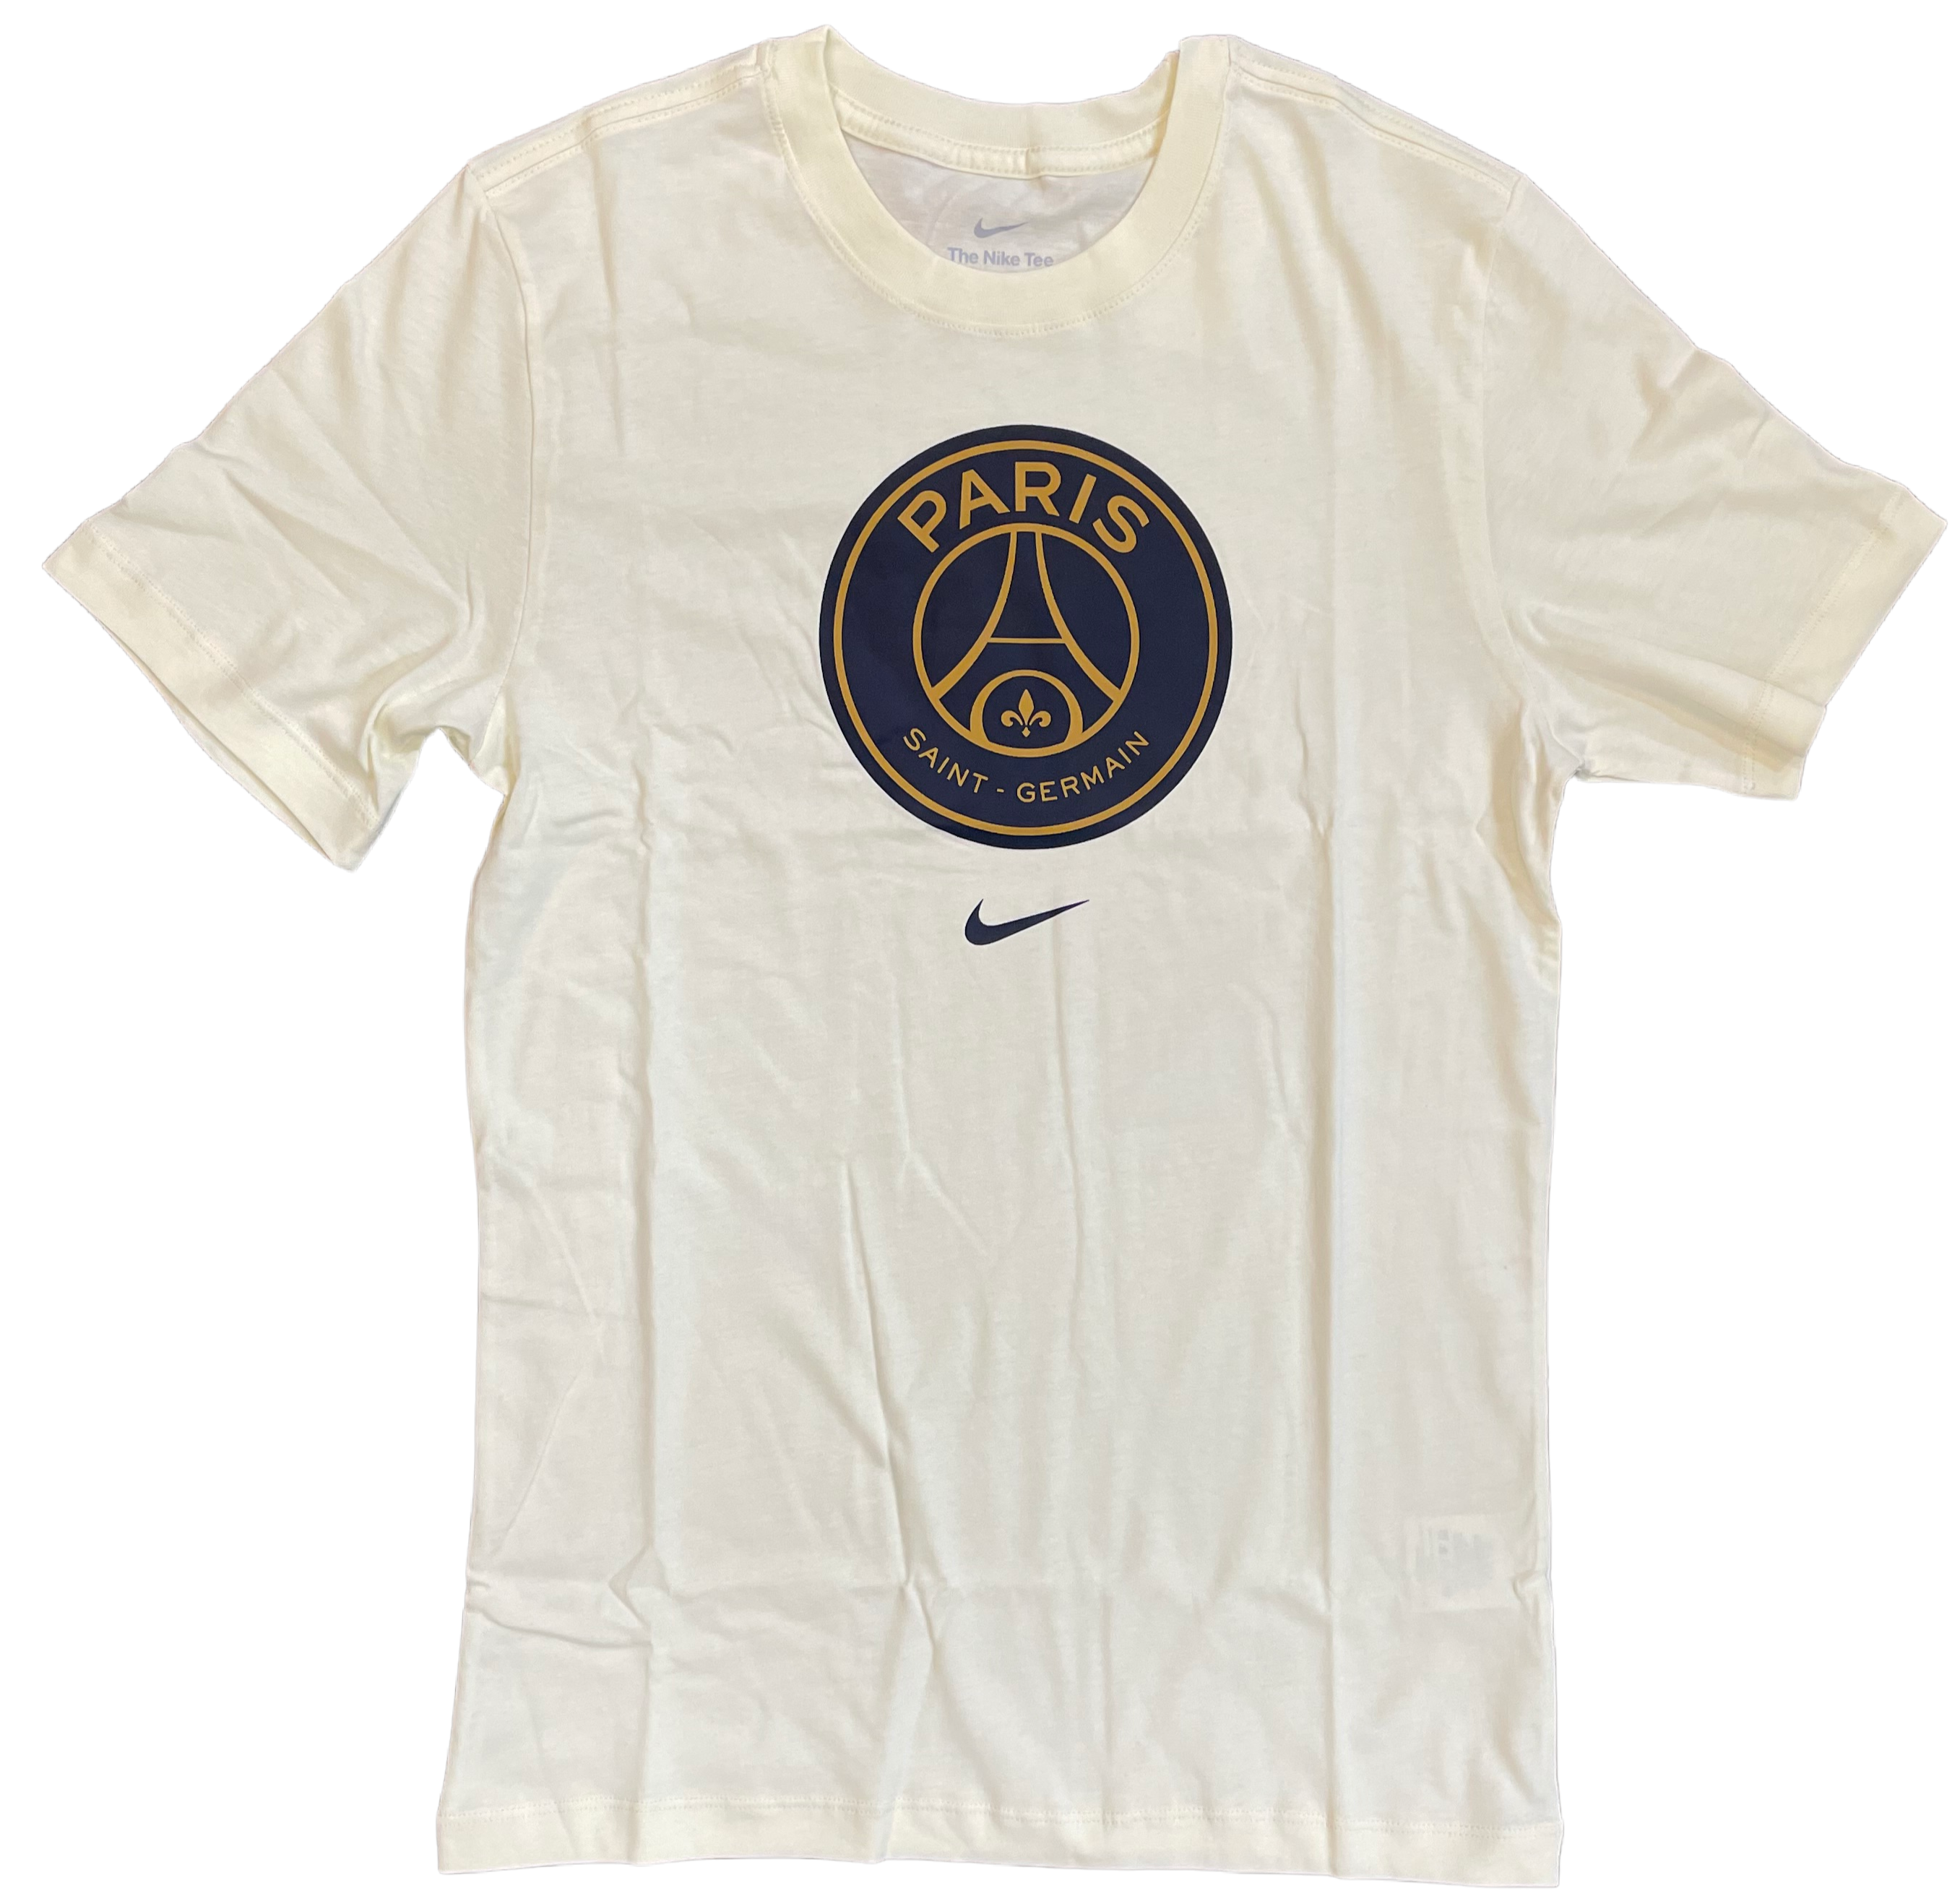 Nike Men's Paris Saint-Germain Crest Soccer T-Shirt